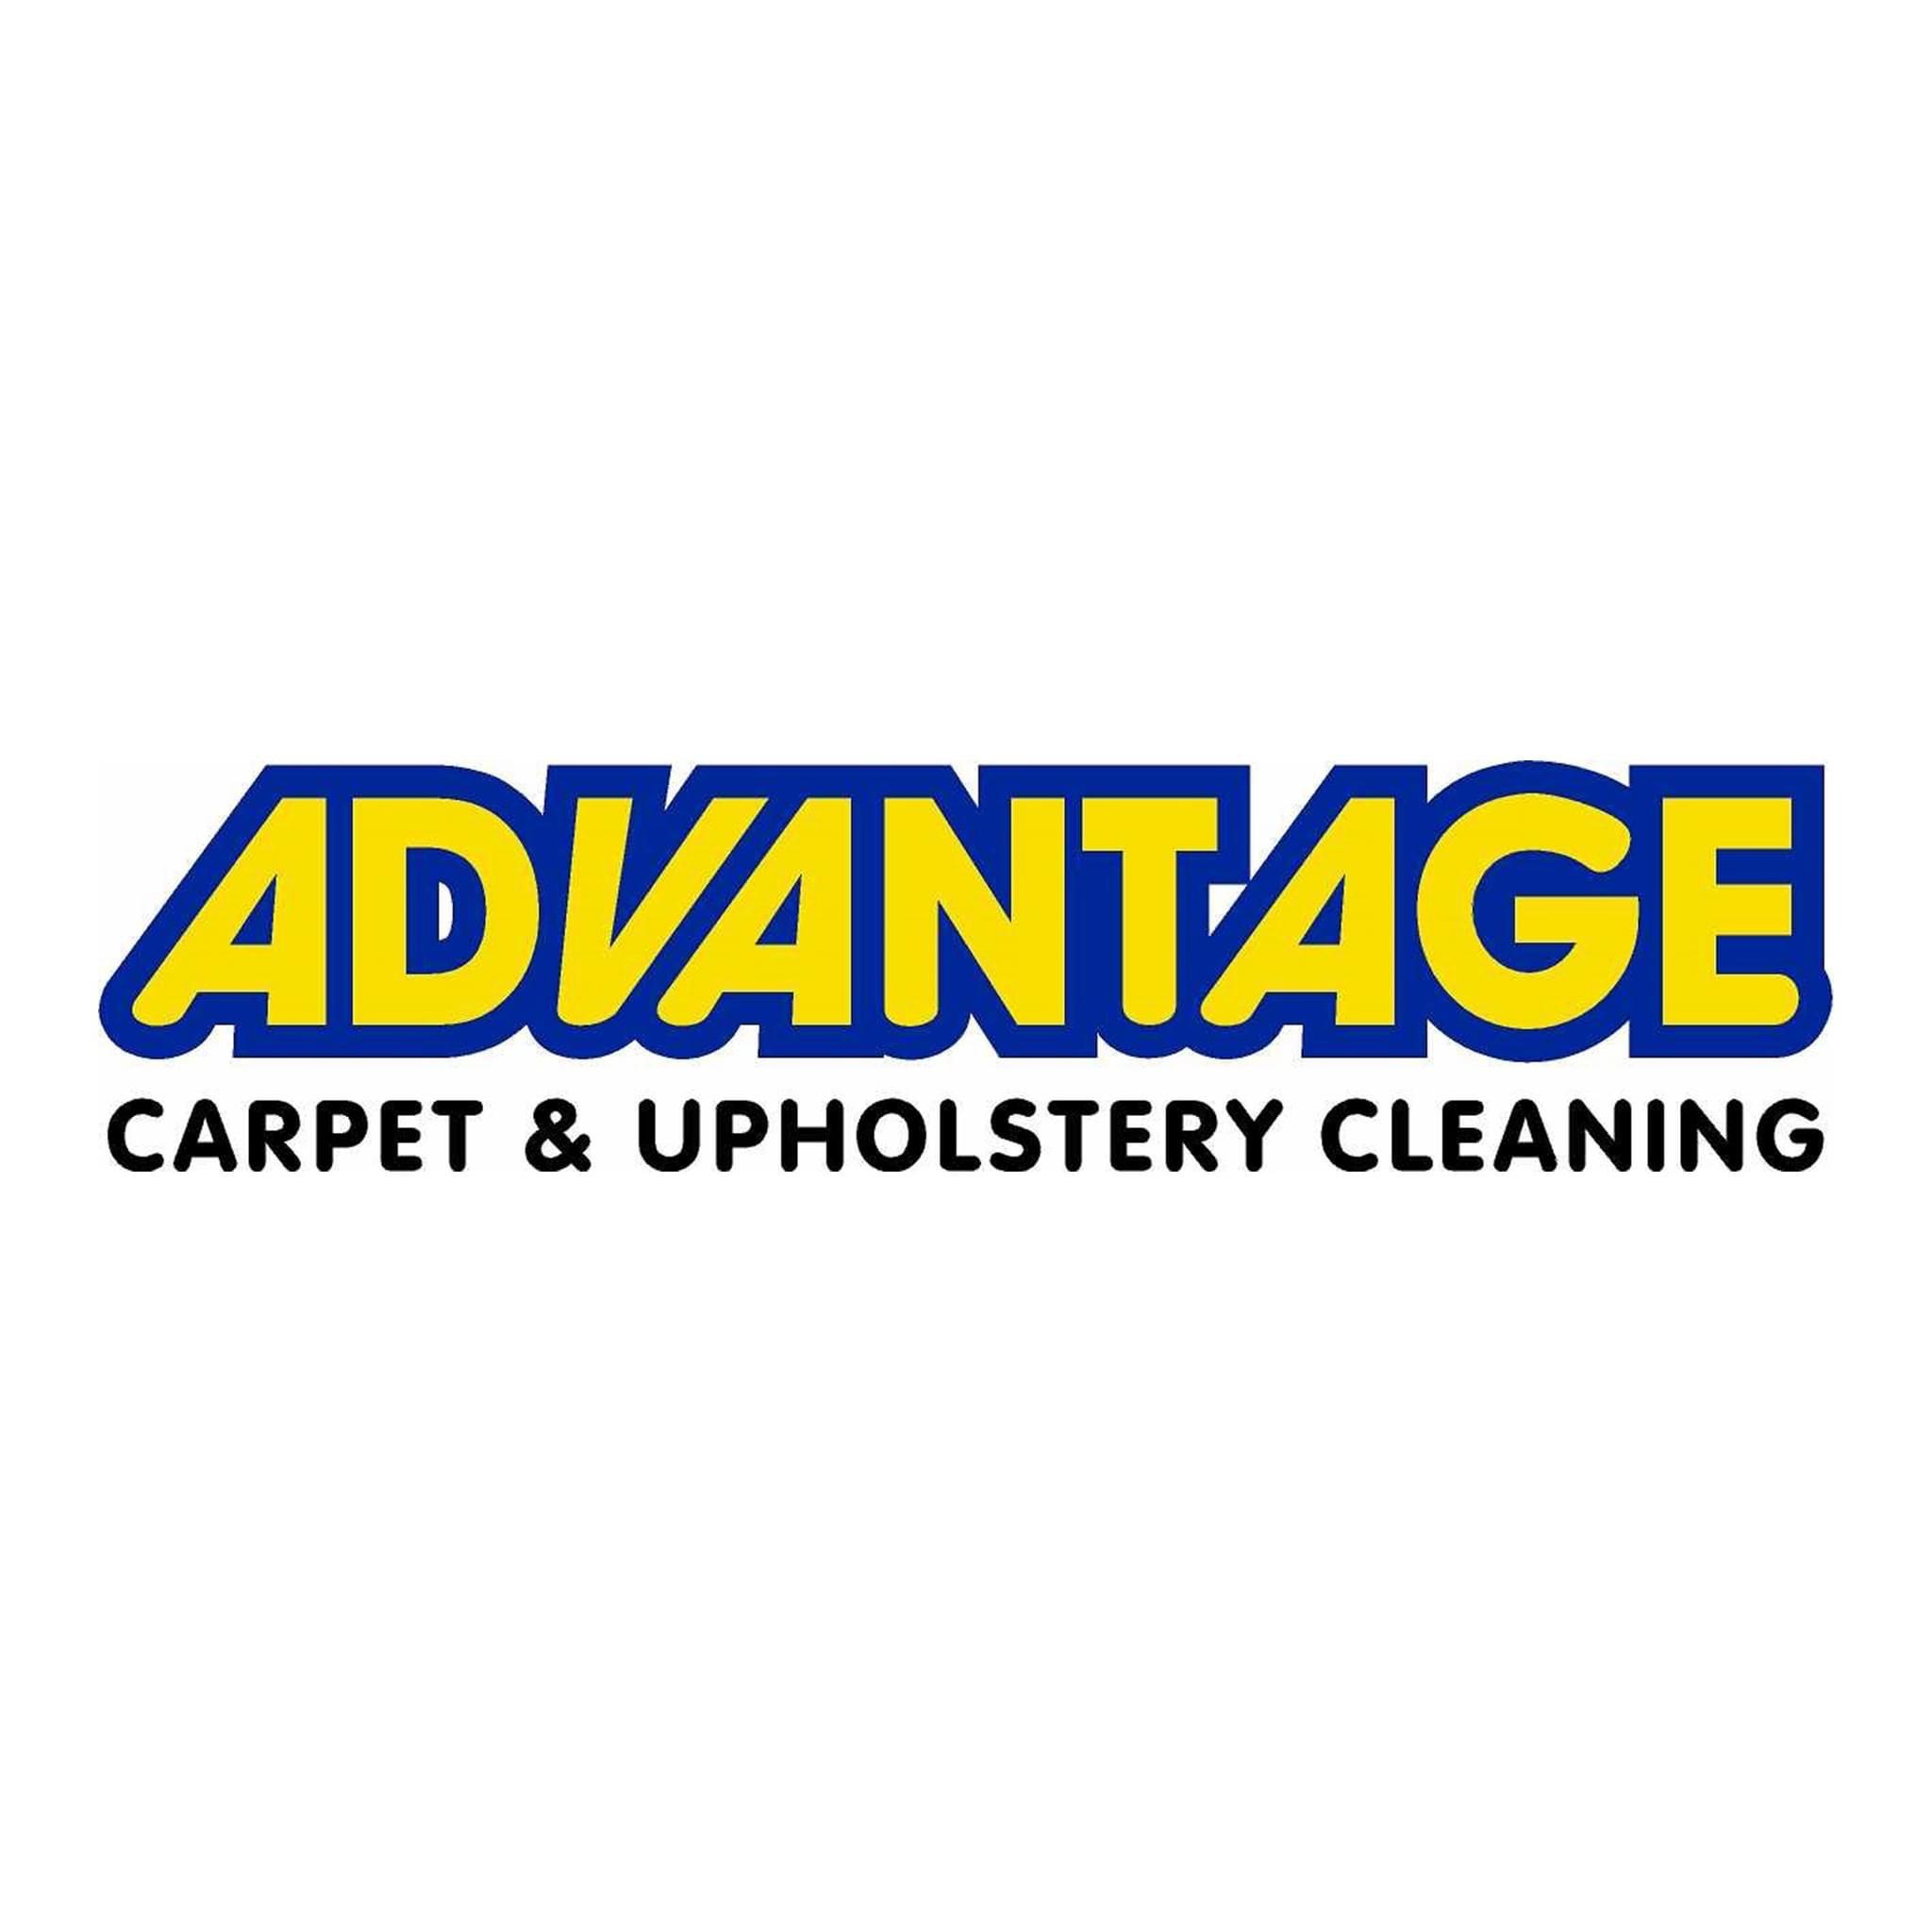 Advantage Carpet & Upholstery Cleaning Ltd.